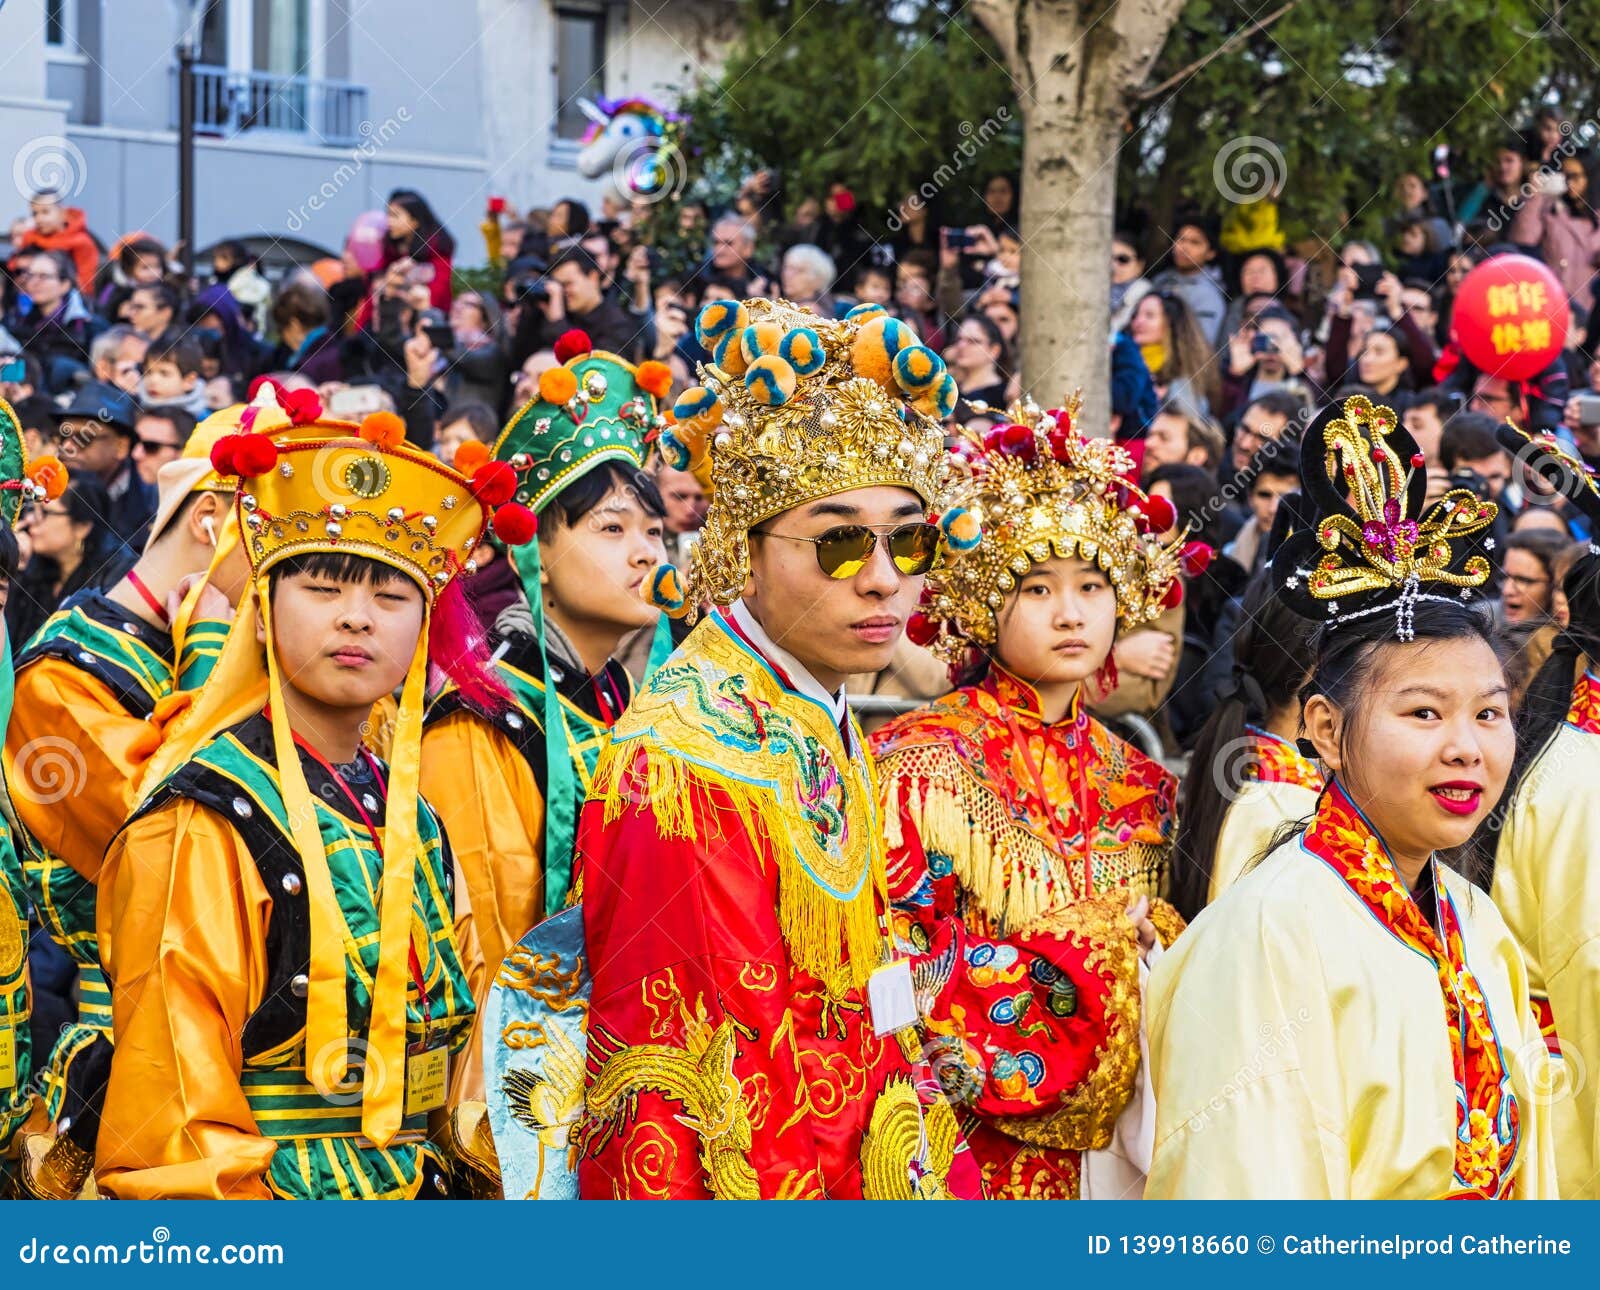 Chinese New Year Celebrations Parade at Paris Editorial Image - Image ...